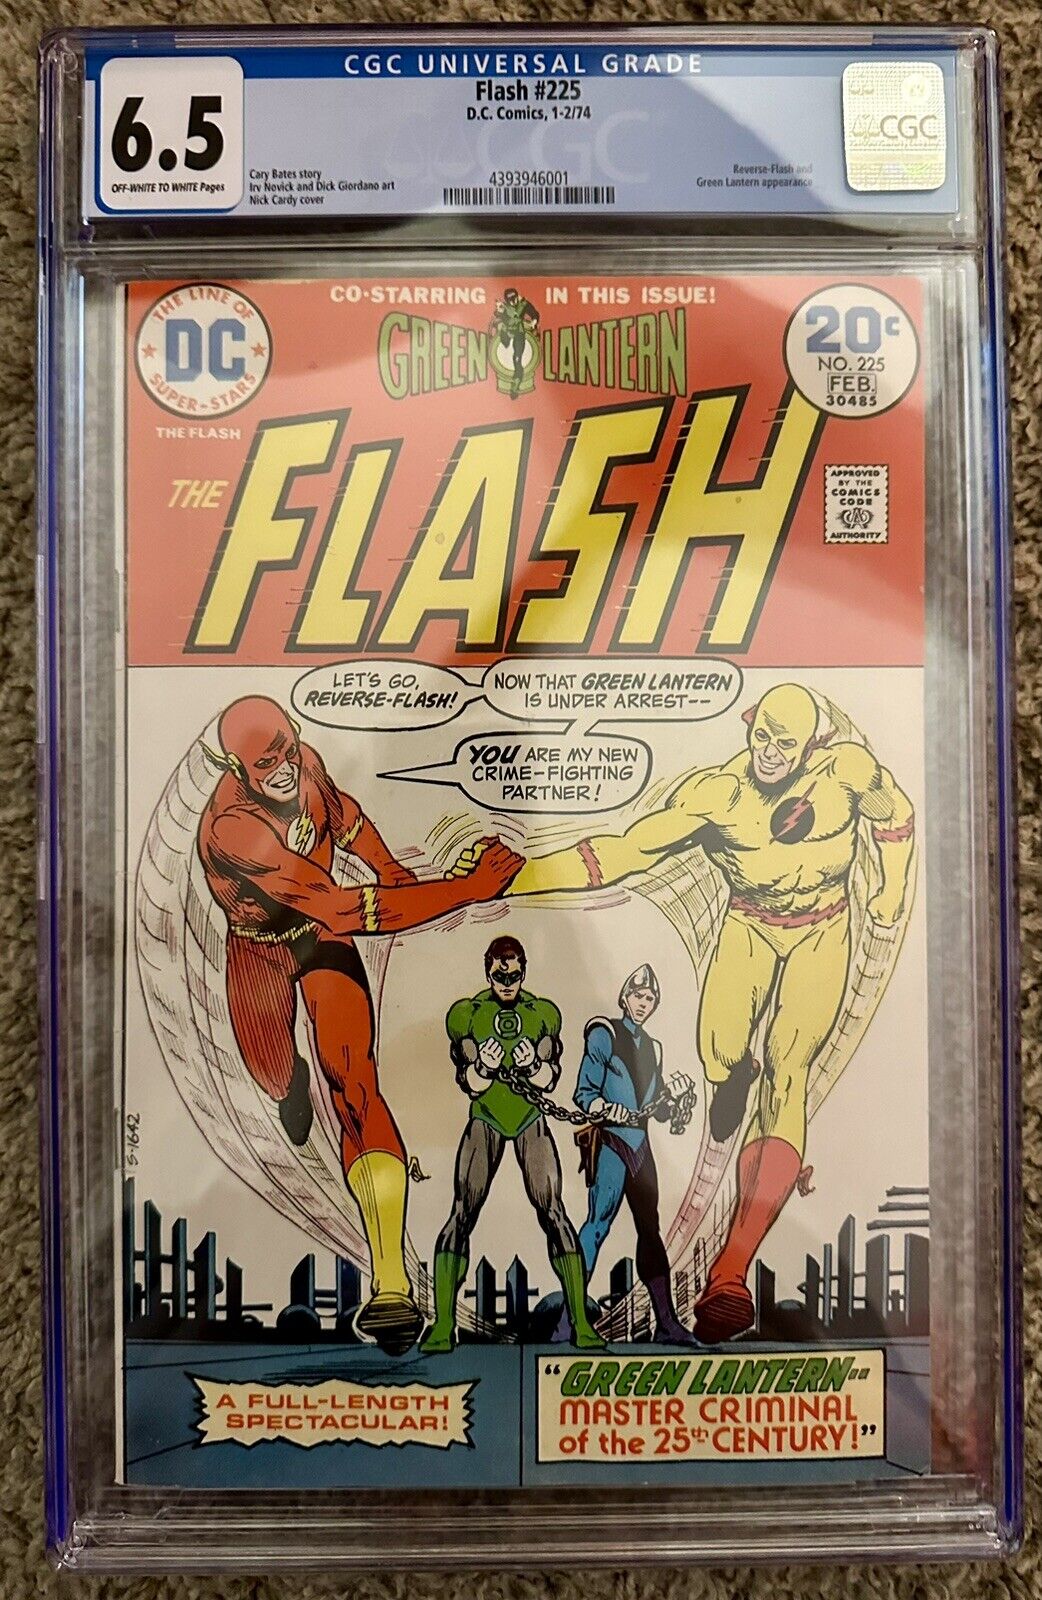 Flash 225 CGC 6.5 Reverse Flash Green Lantern Classic Cover (DC, 1974)